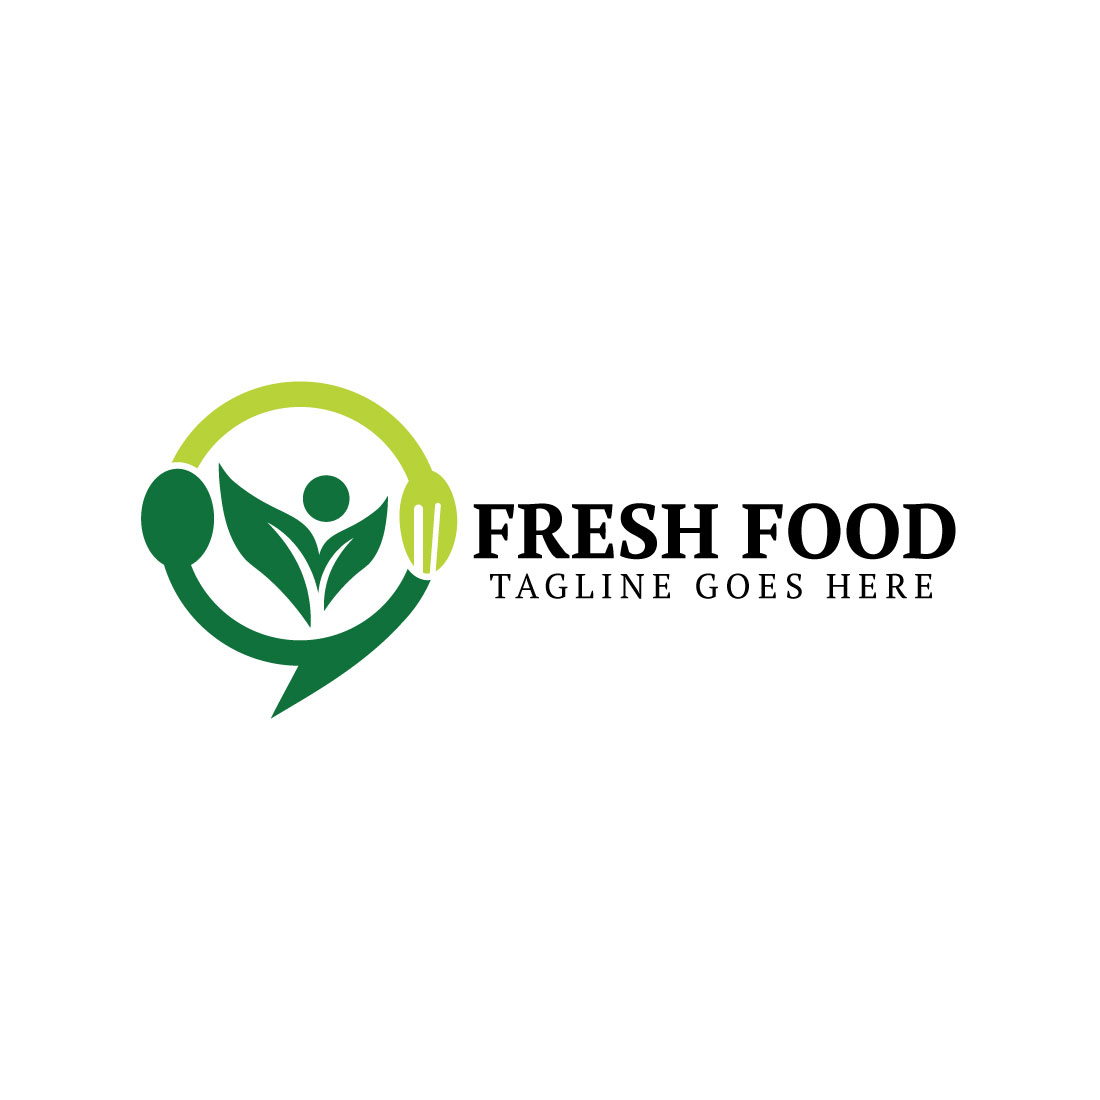 Fresh food logo design preview image.